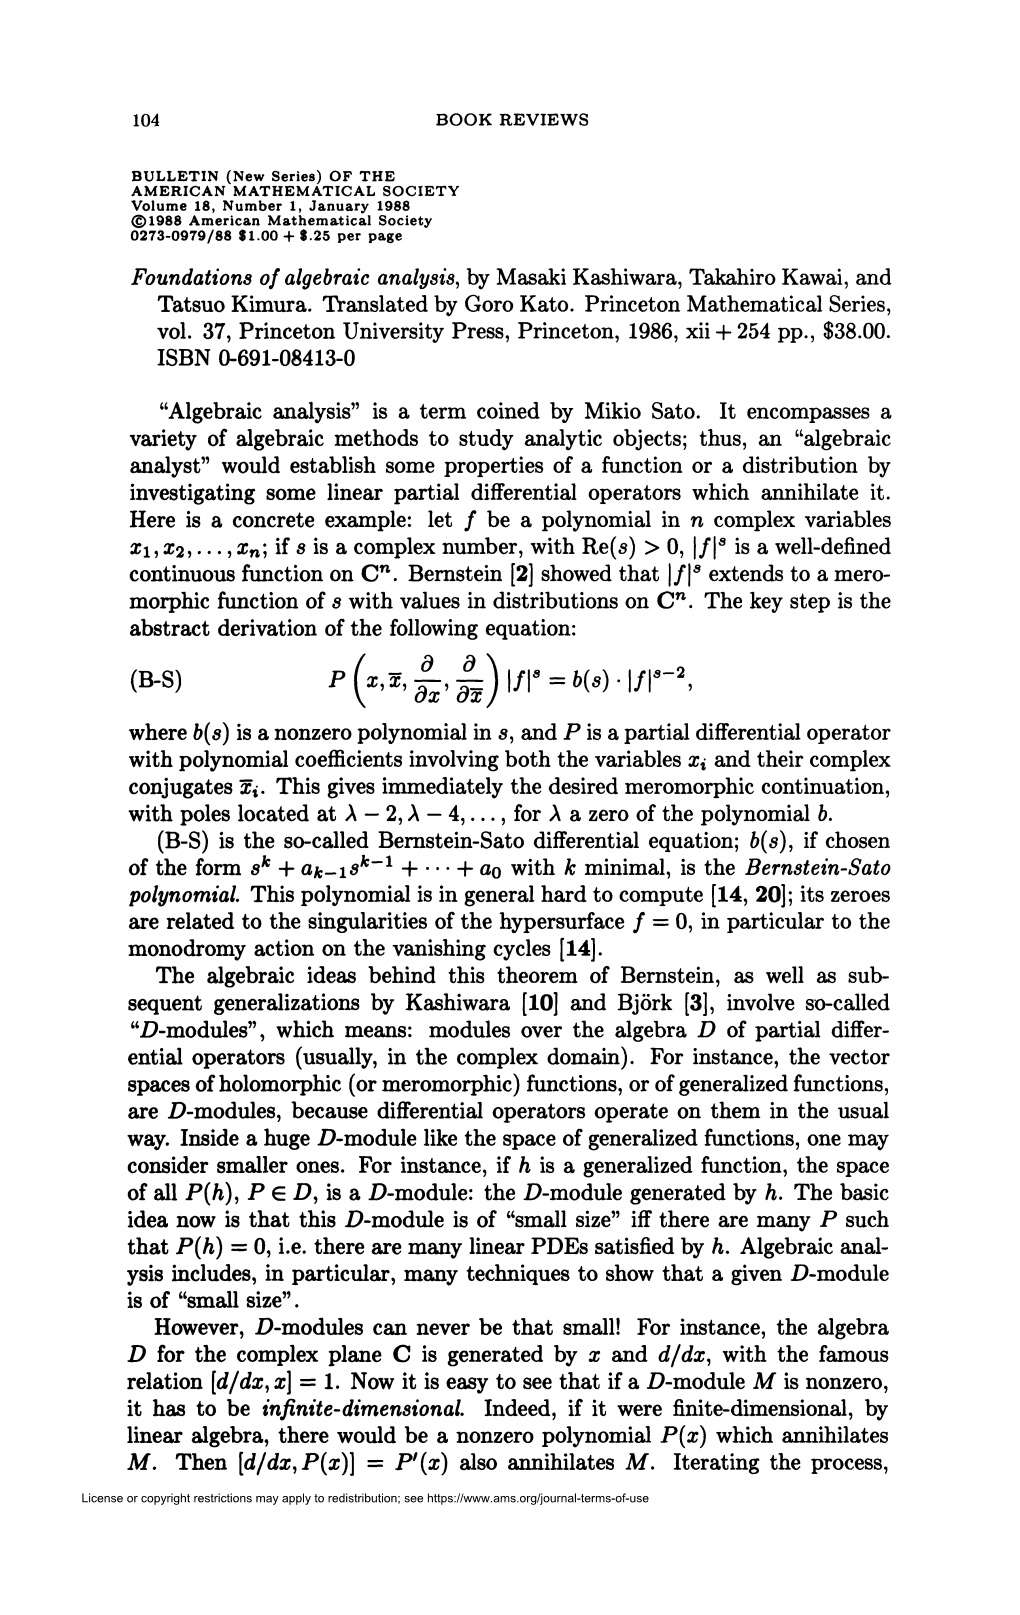 Foundations of Algebraic Analysis, by Masaki Kashiwara, Takahiro Kawai, and Tatsuo Kimura